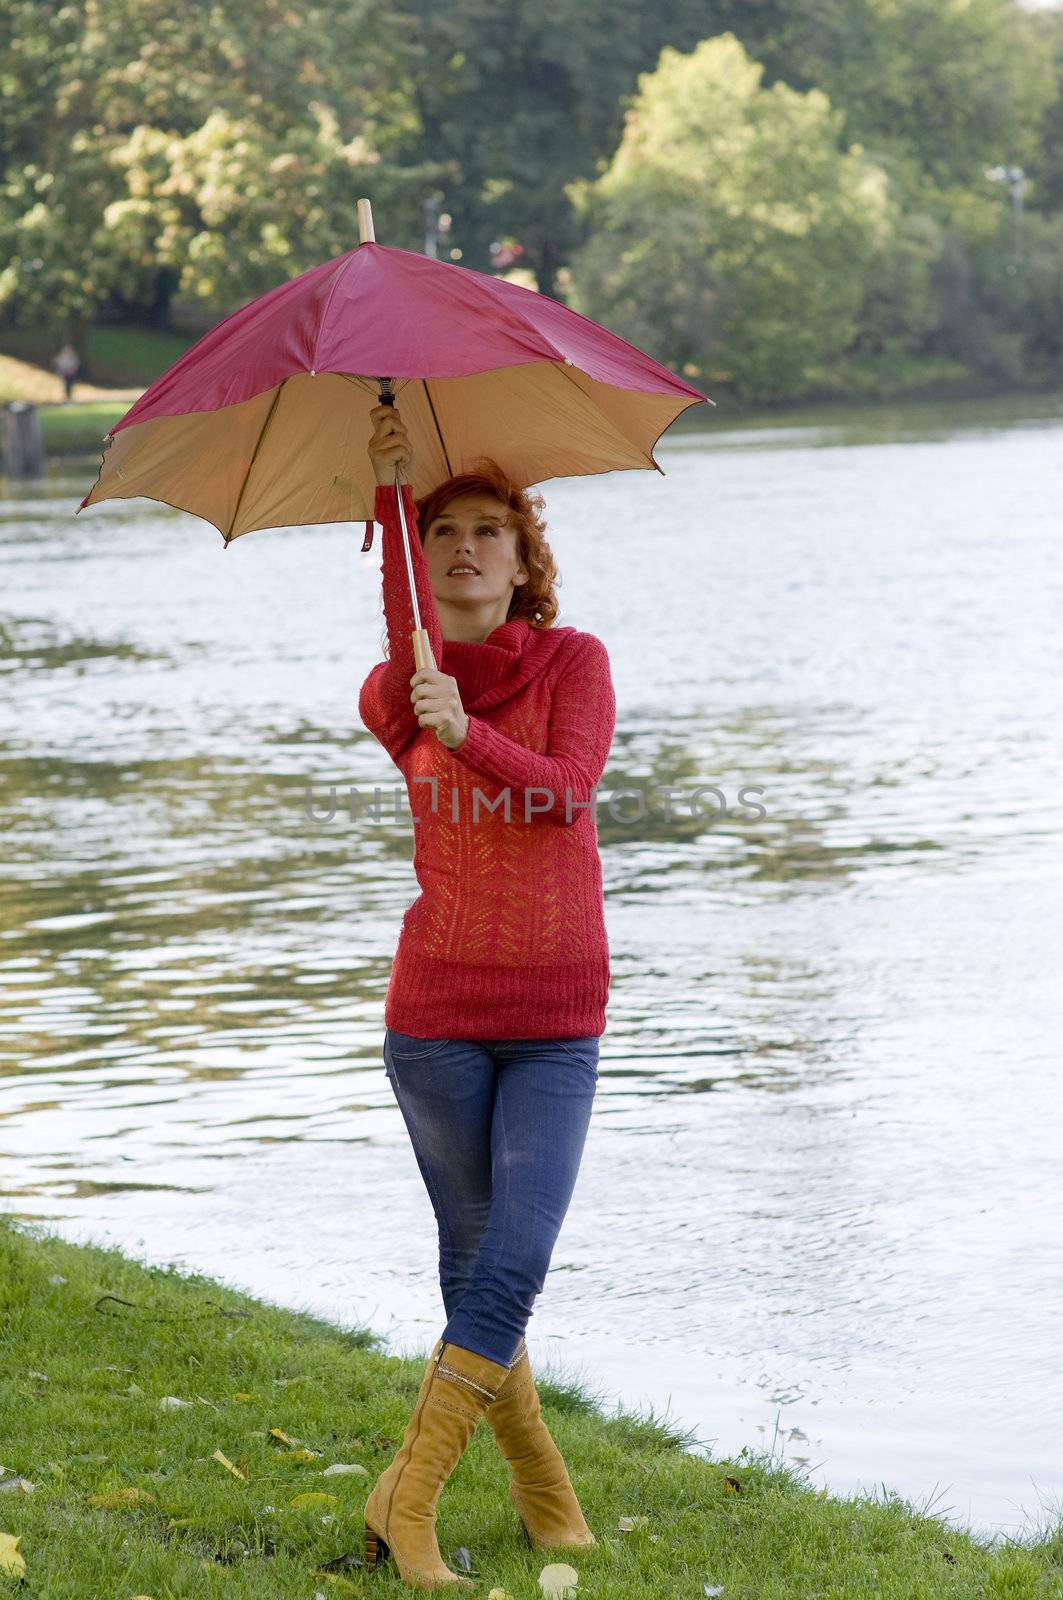 very nice girl closing her umbrella in park near a river